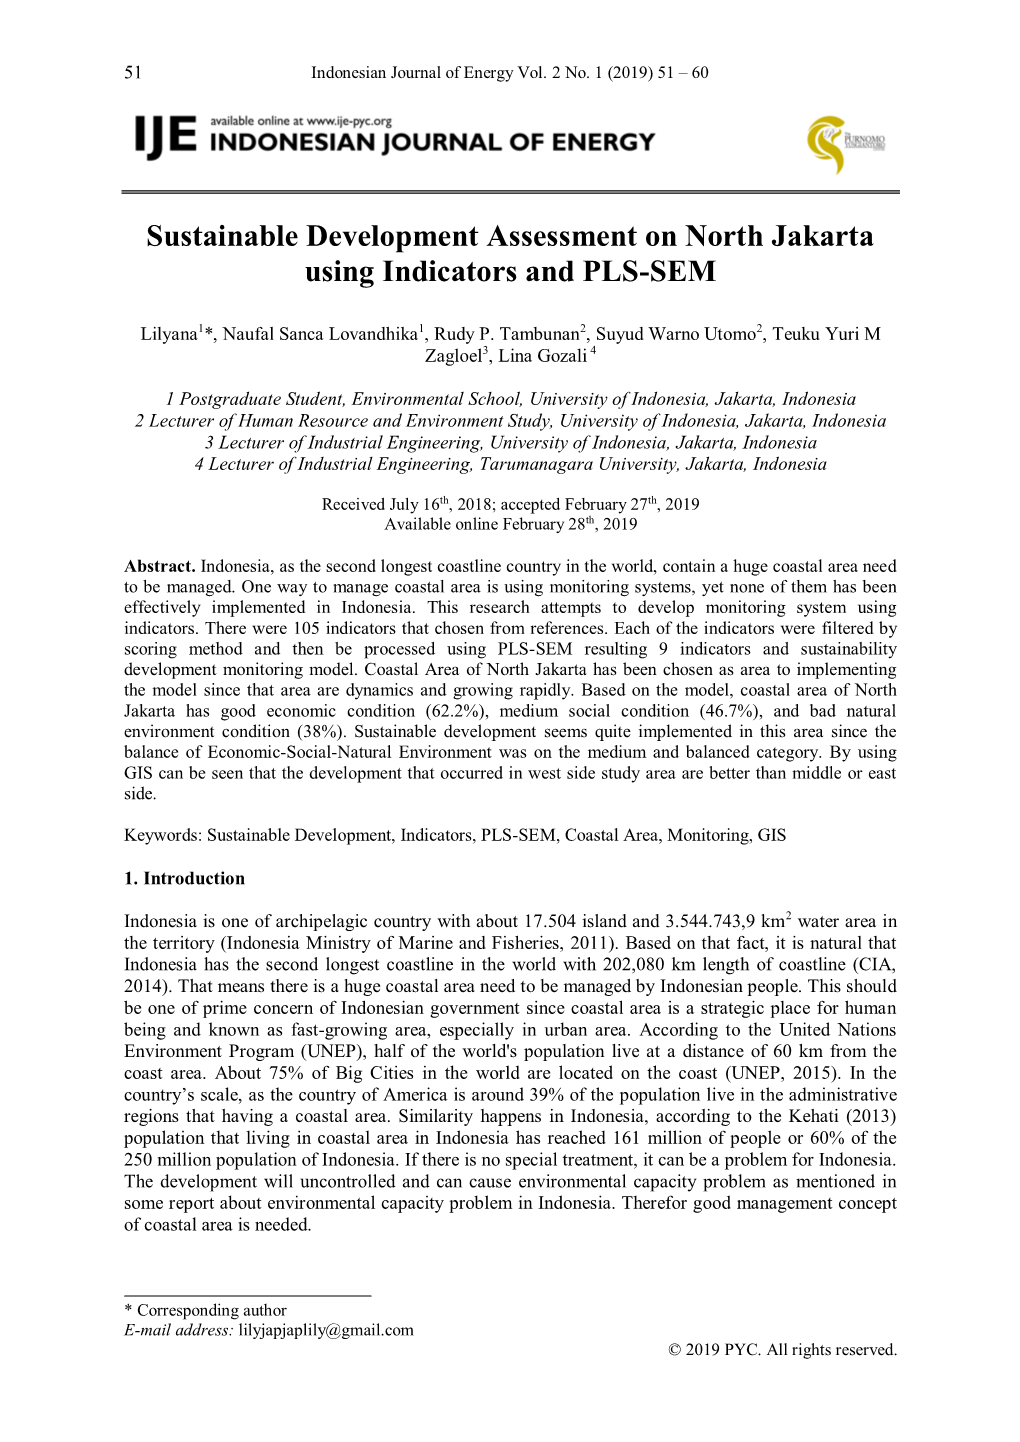 Sustainable Development Assessment on North Jakarta Using Indicators and PLS-SEM